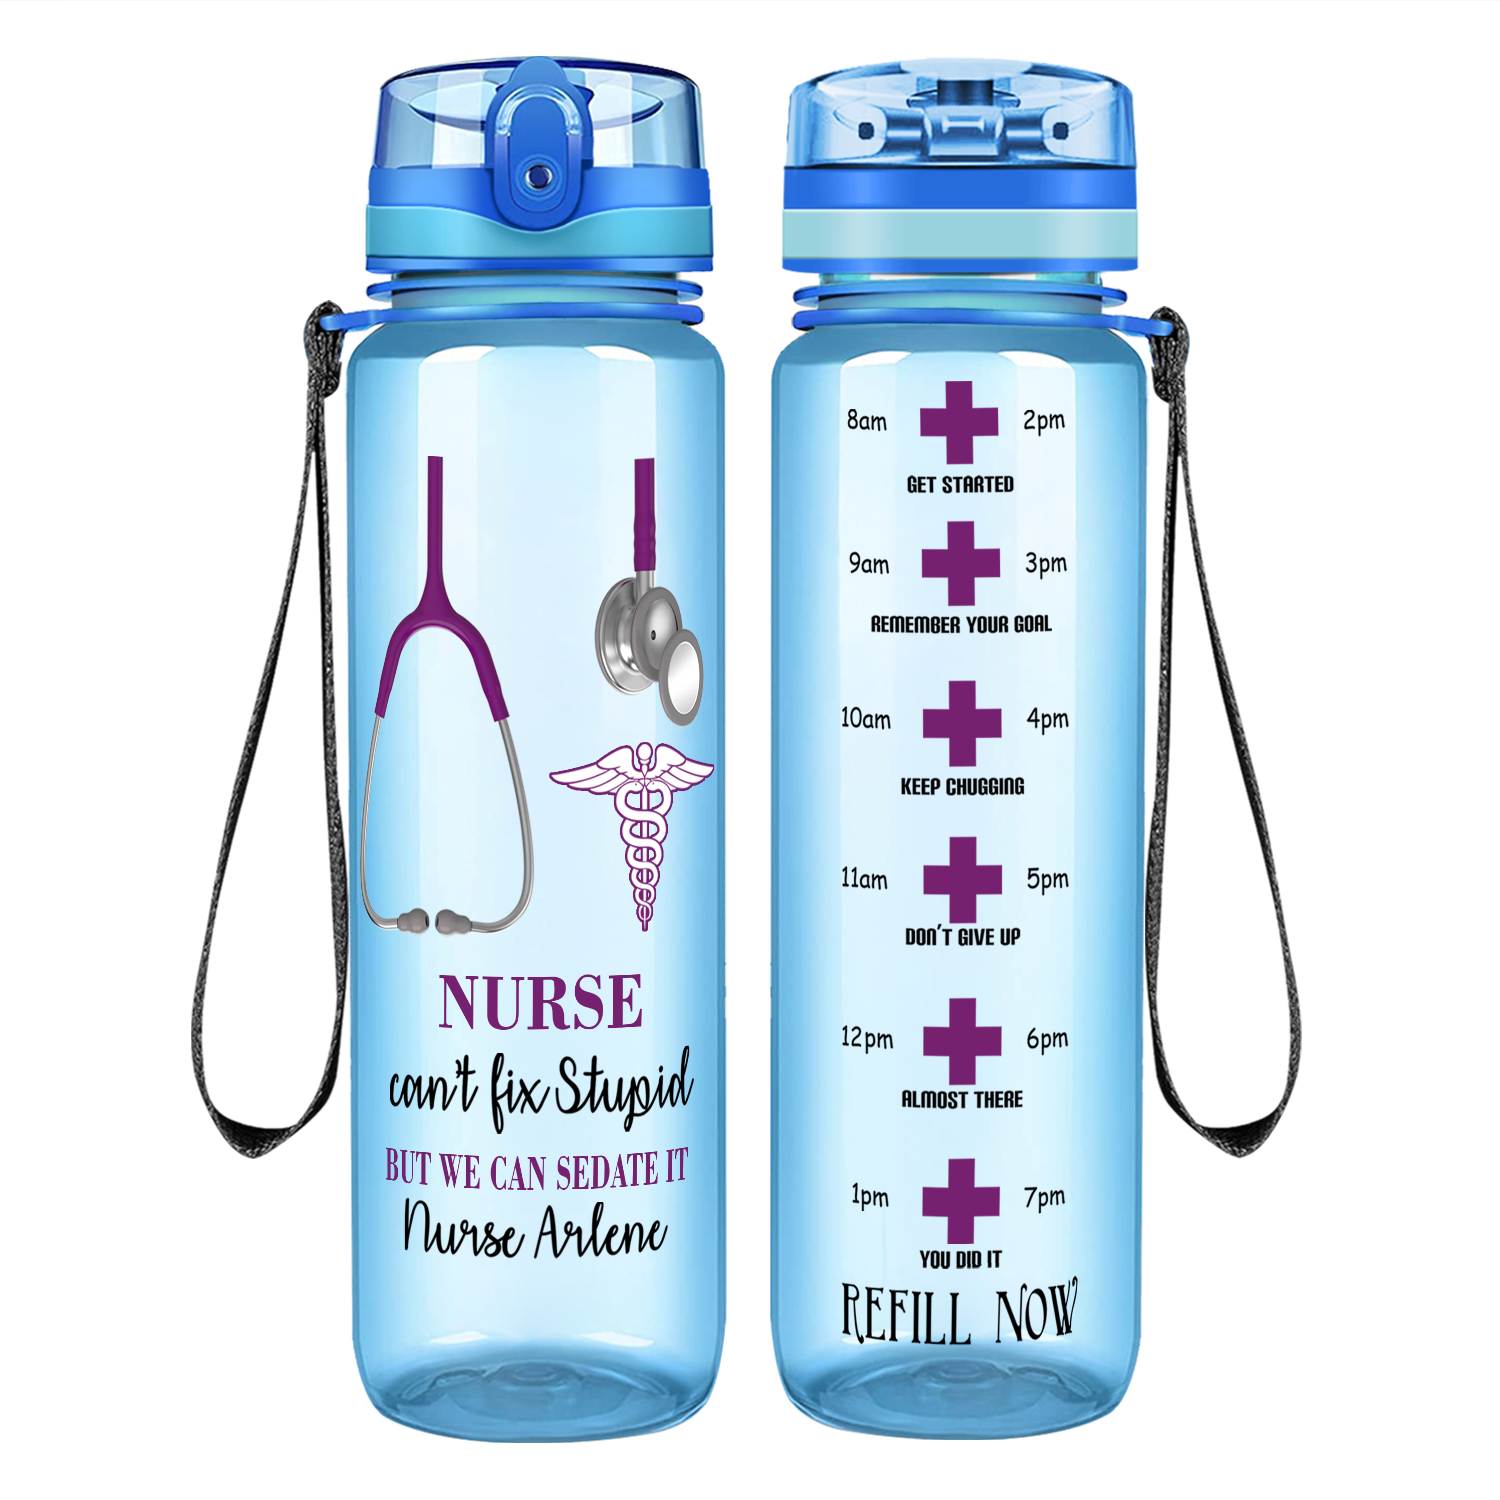 25 oz Aluminum Sports Water Travel Bottle Nurses Can't Fix Stupid Sedate It (Hot-Pink)